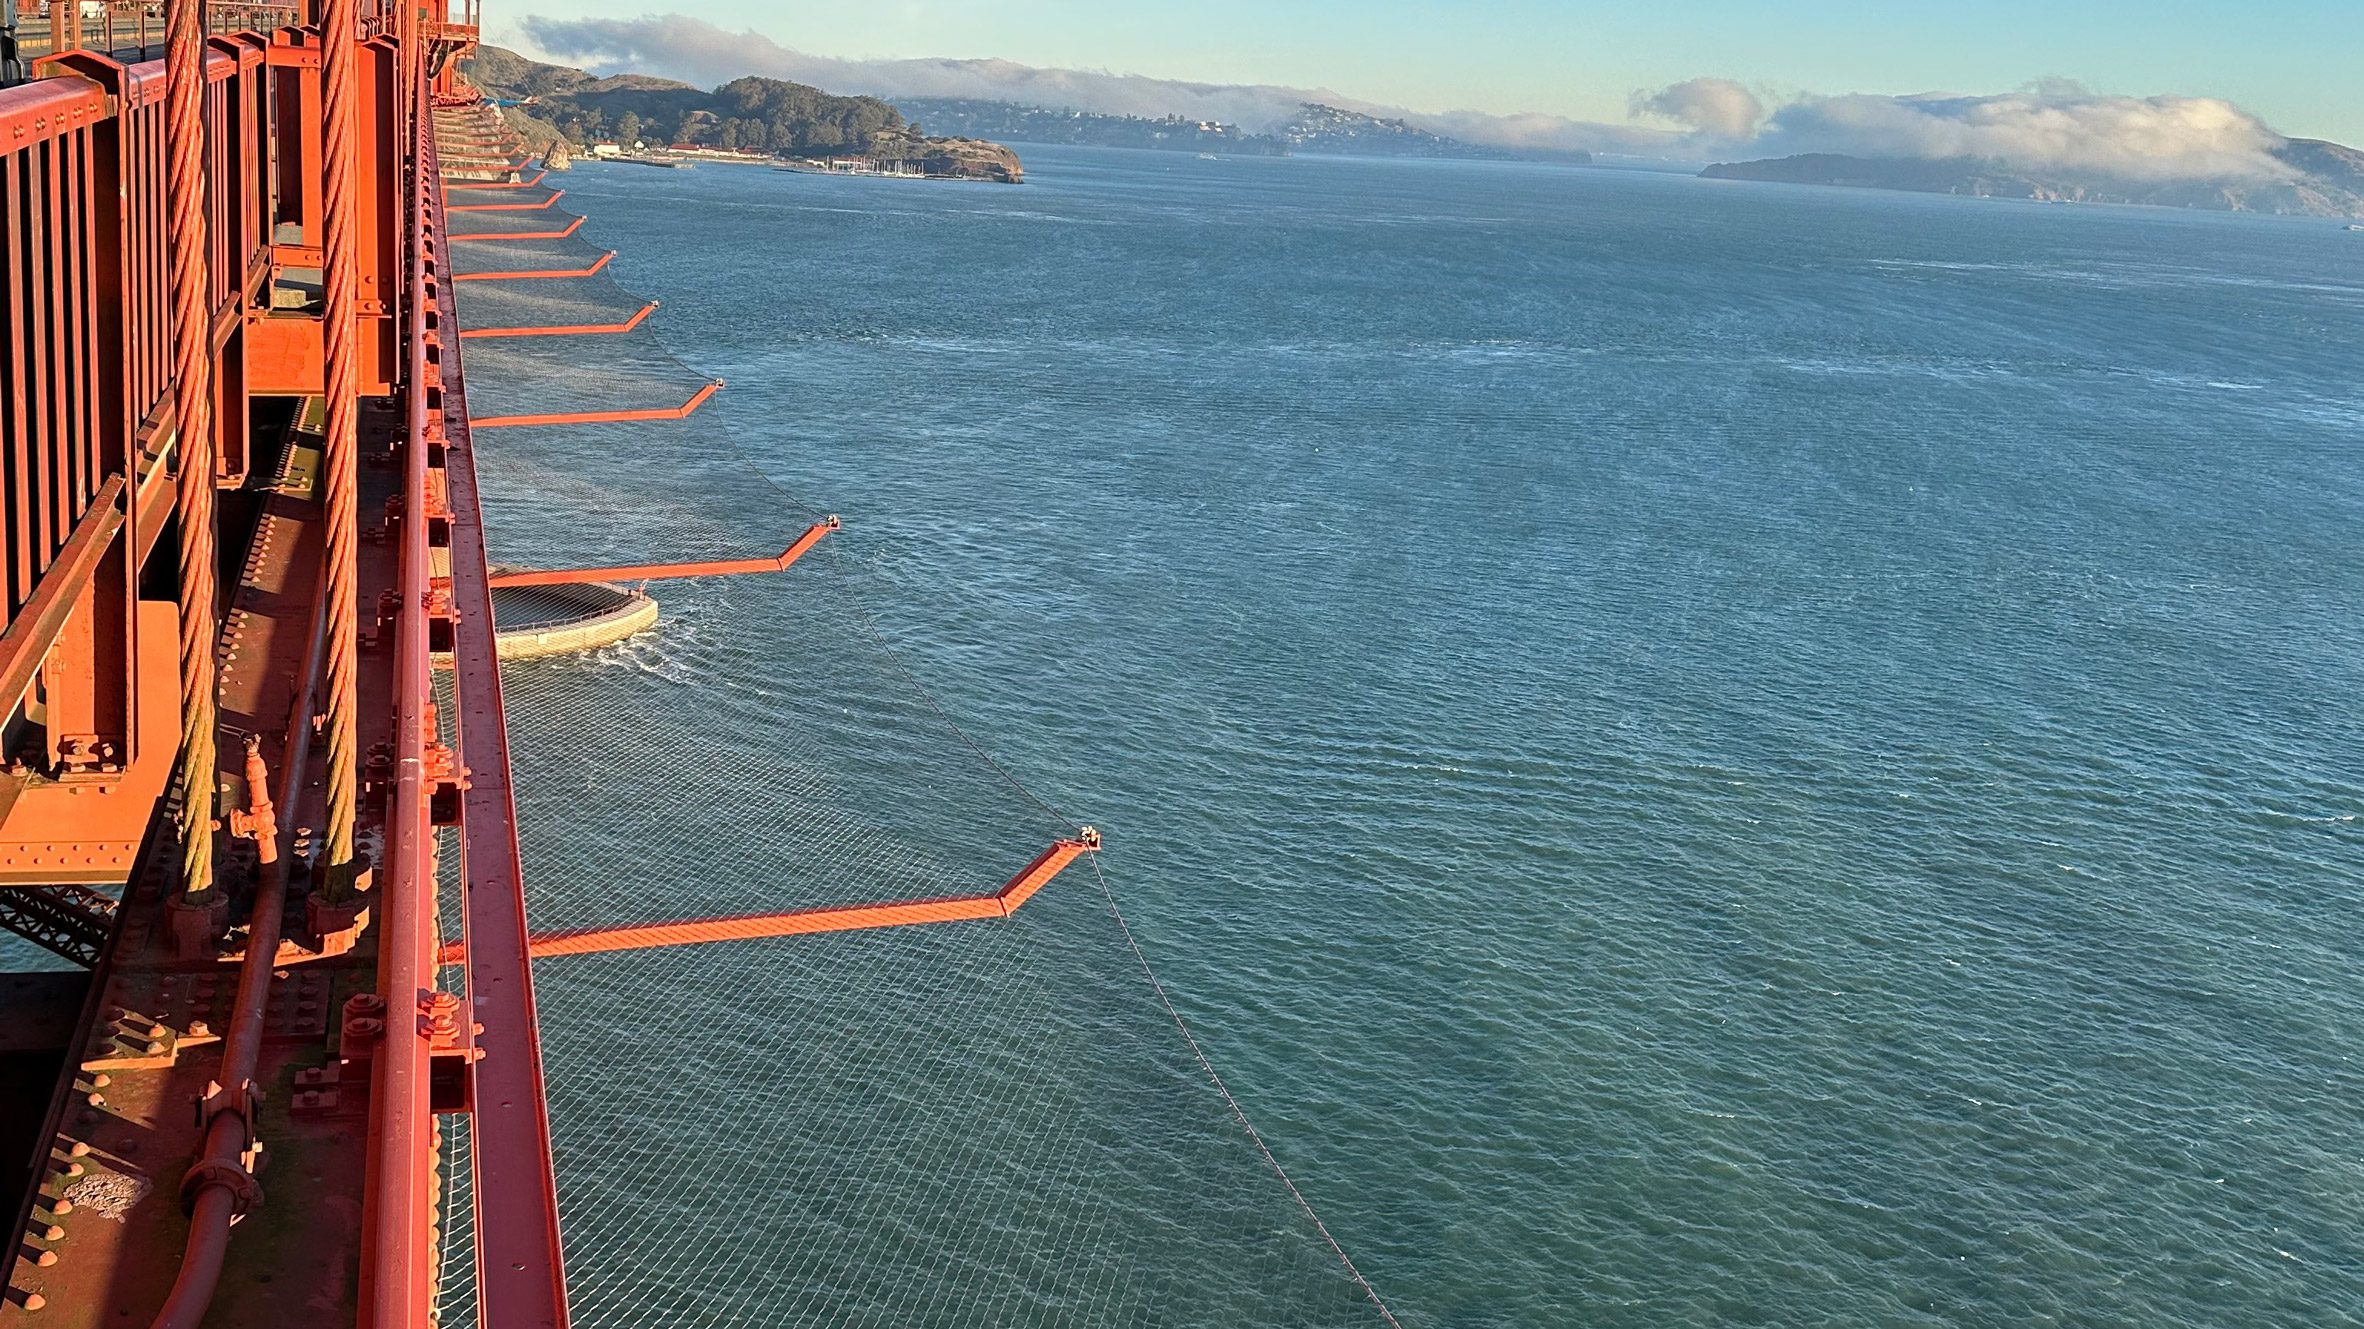 Kilometres of suicide-deterrent nets installed under Golden Gate